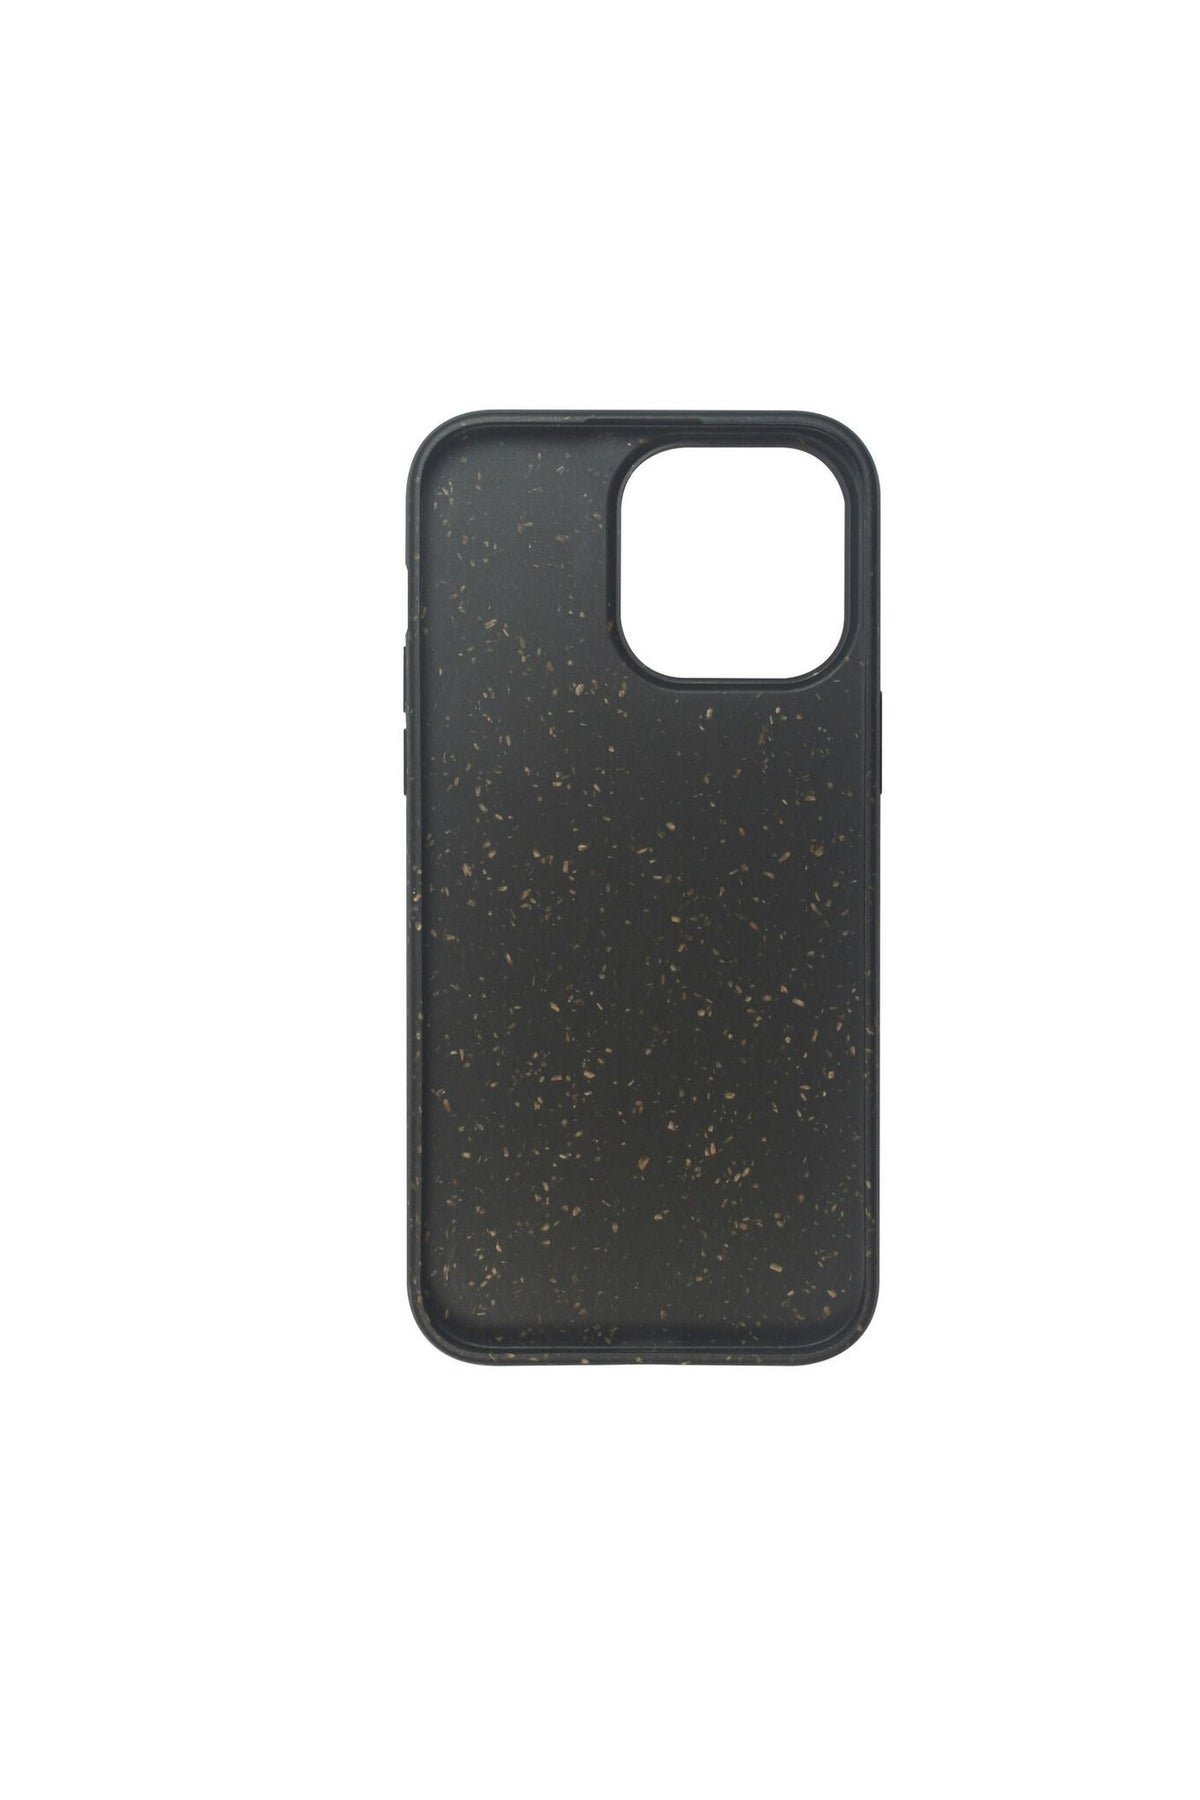 eSTUFF COPENHAGEN 100% Biodegradable mobile phone case for iPhone 14 Pro Max in Black